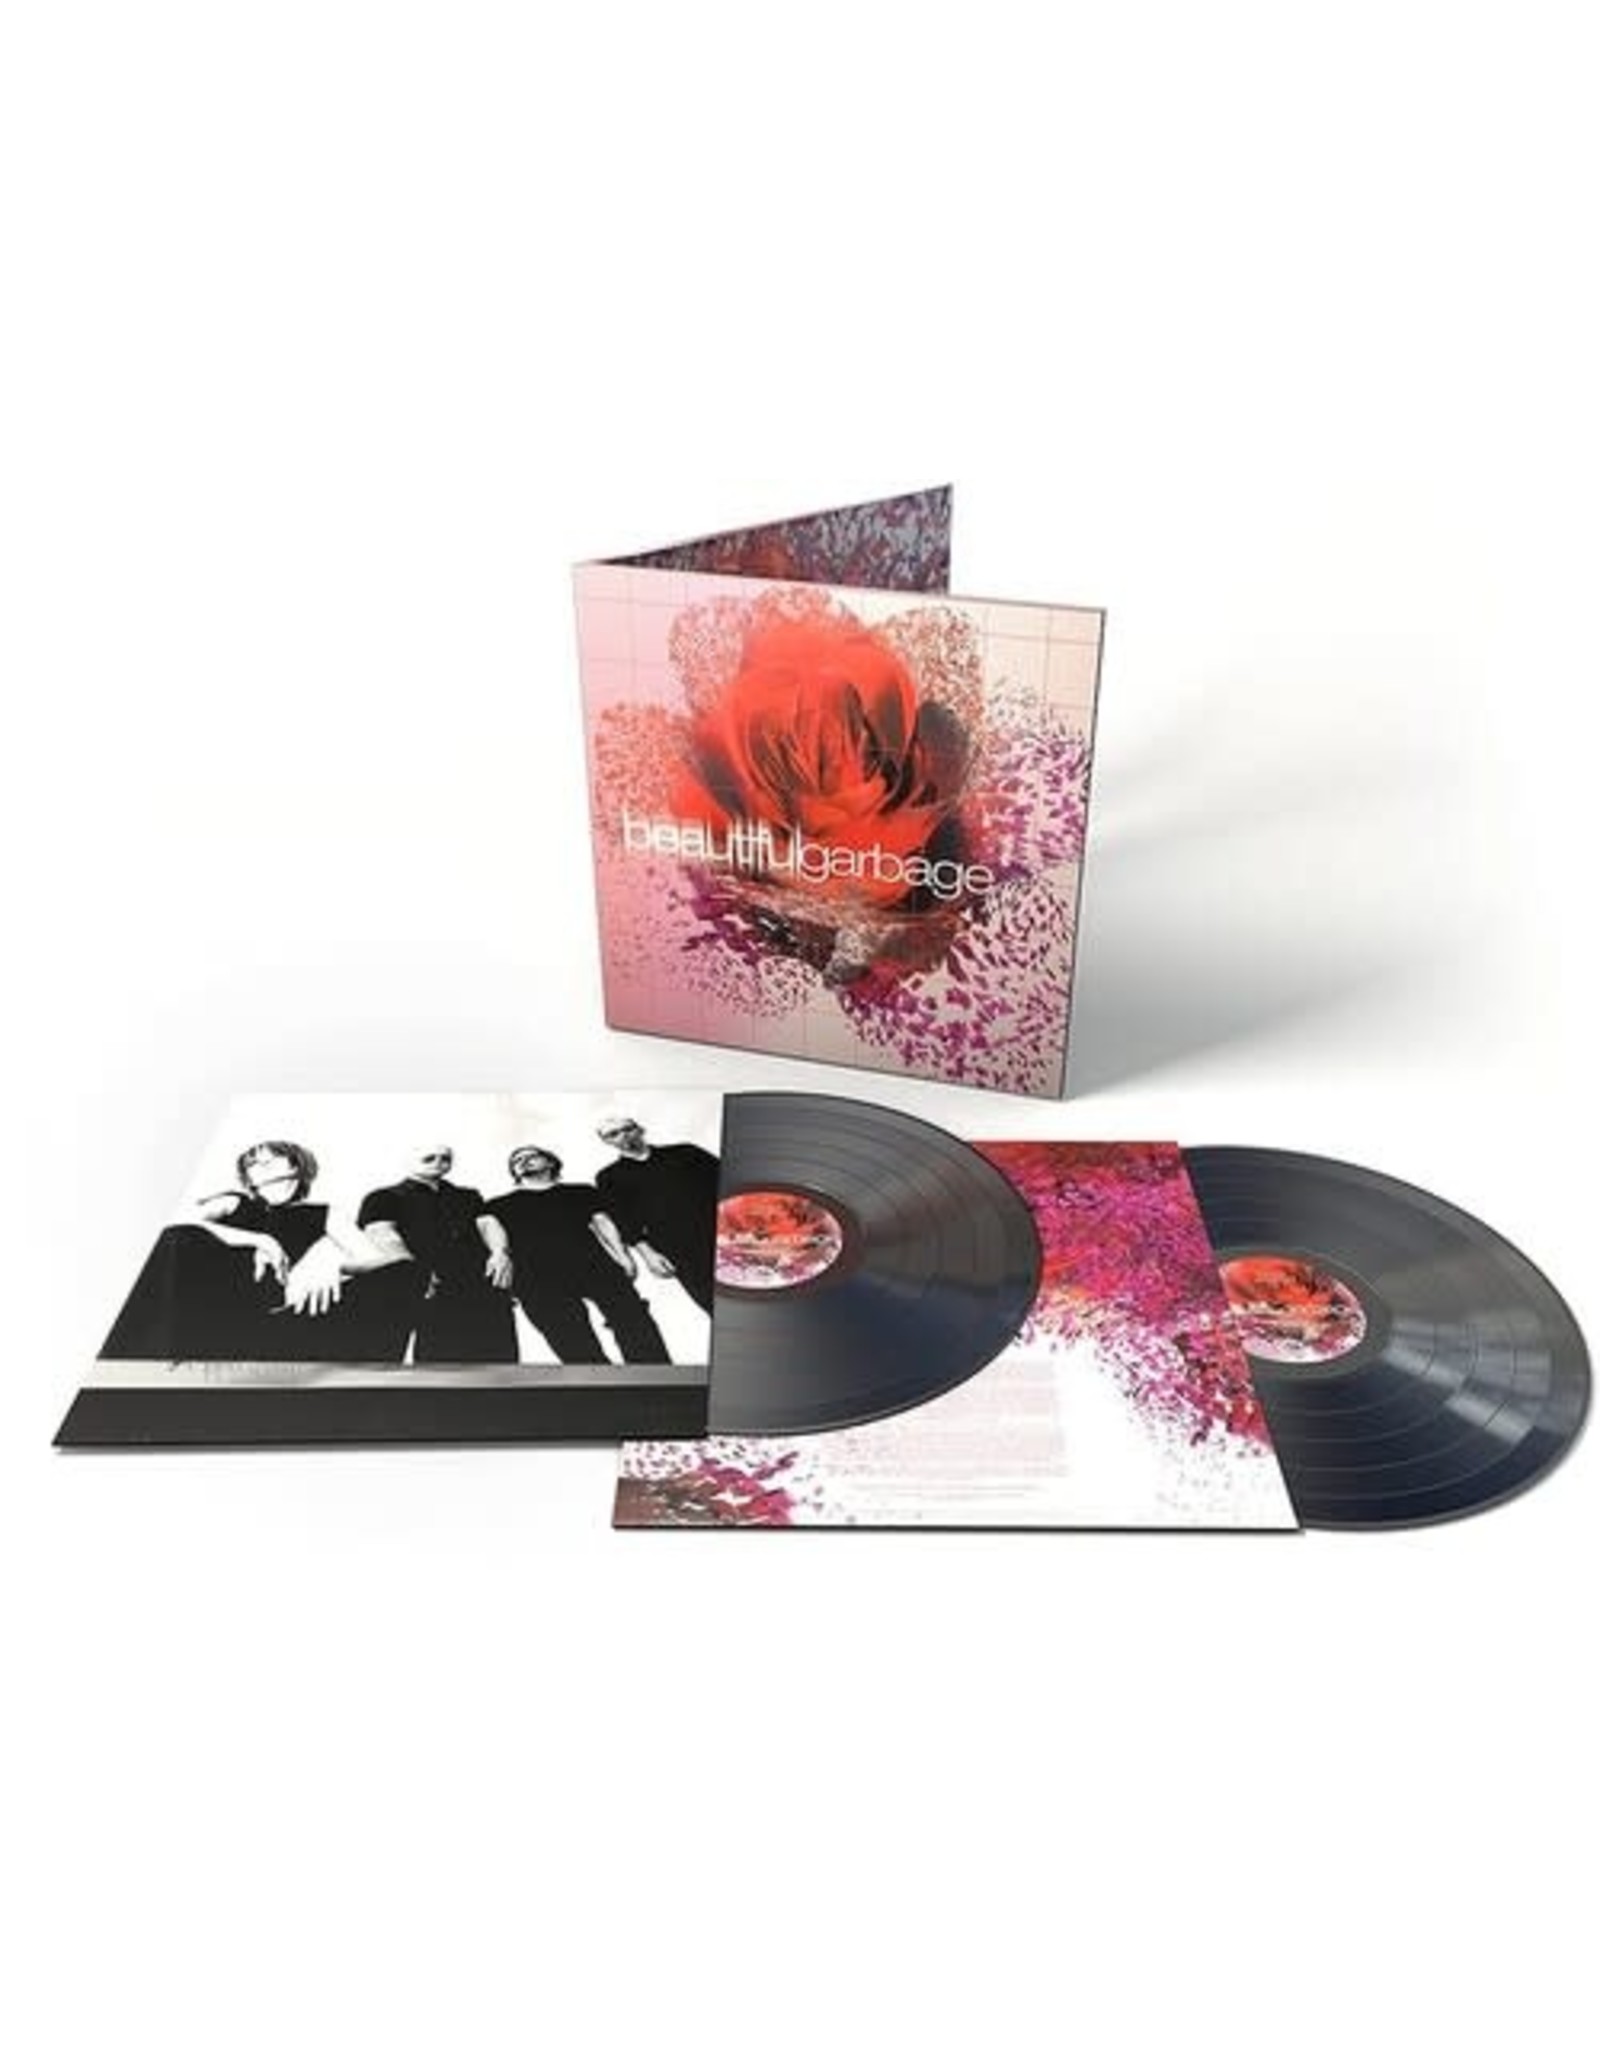 New Vinyl Garbage - beautifulgarbage (20th Anniversary) 2 LP